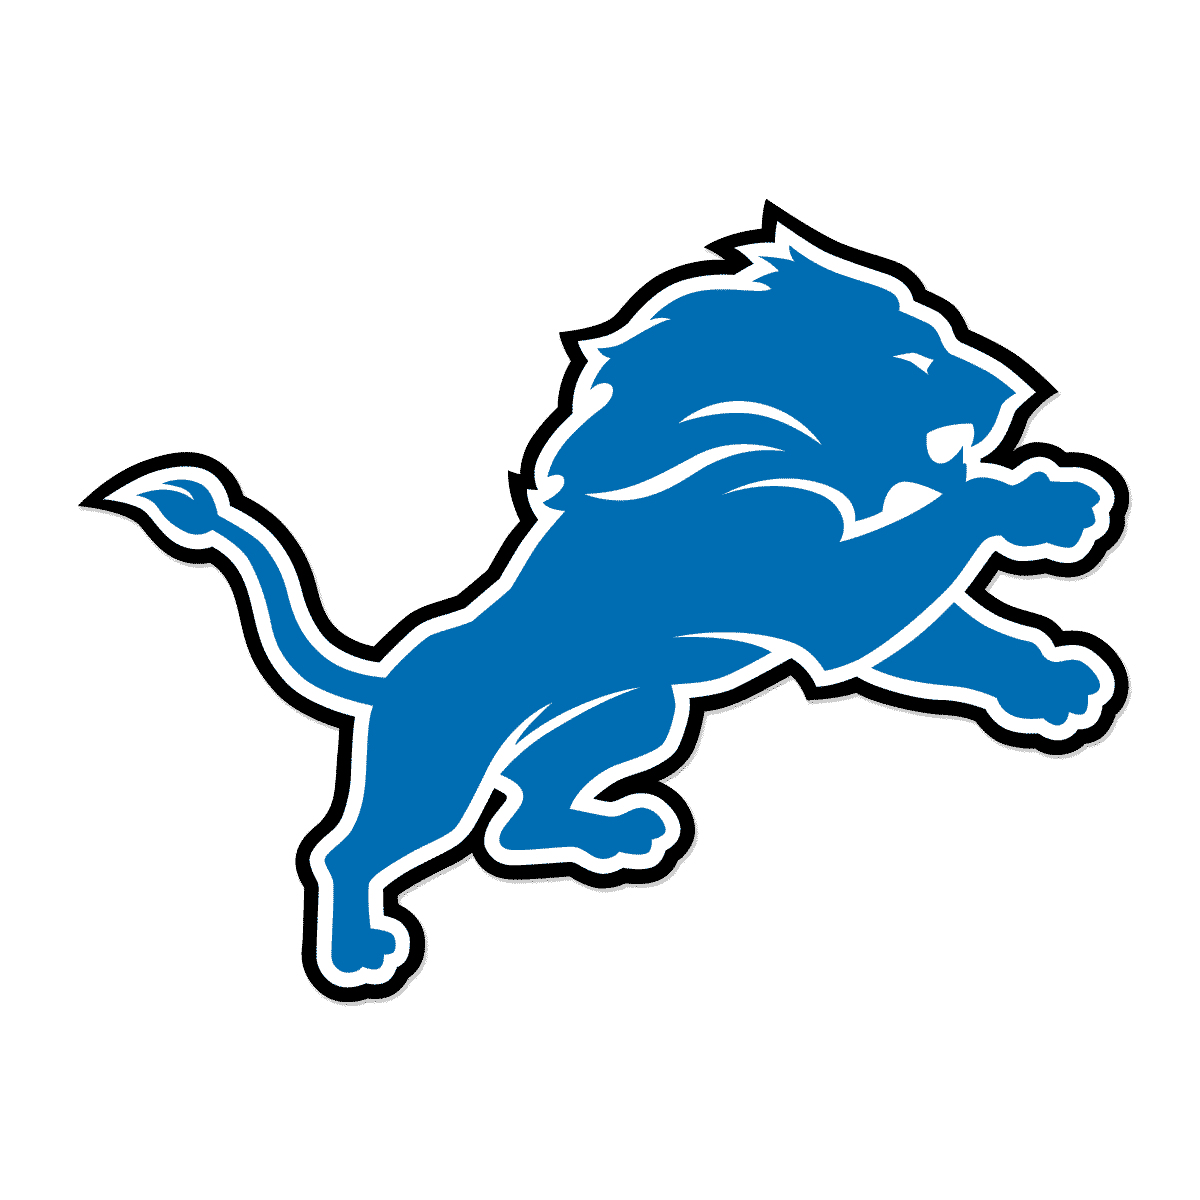 lions-logo